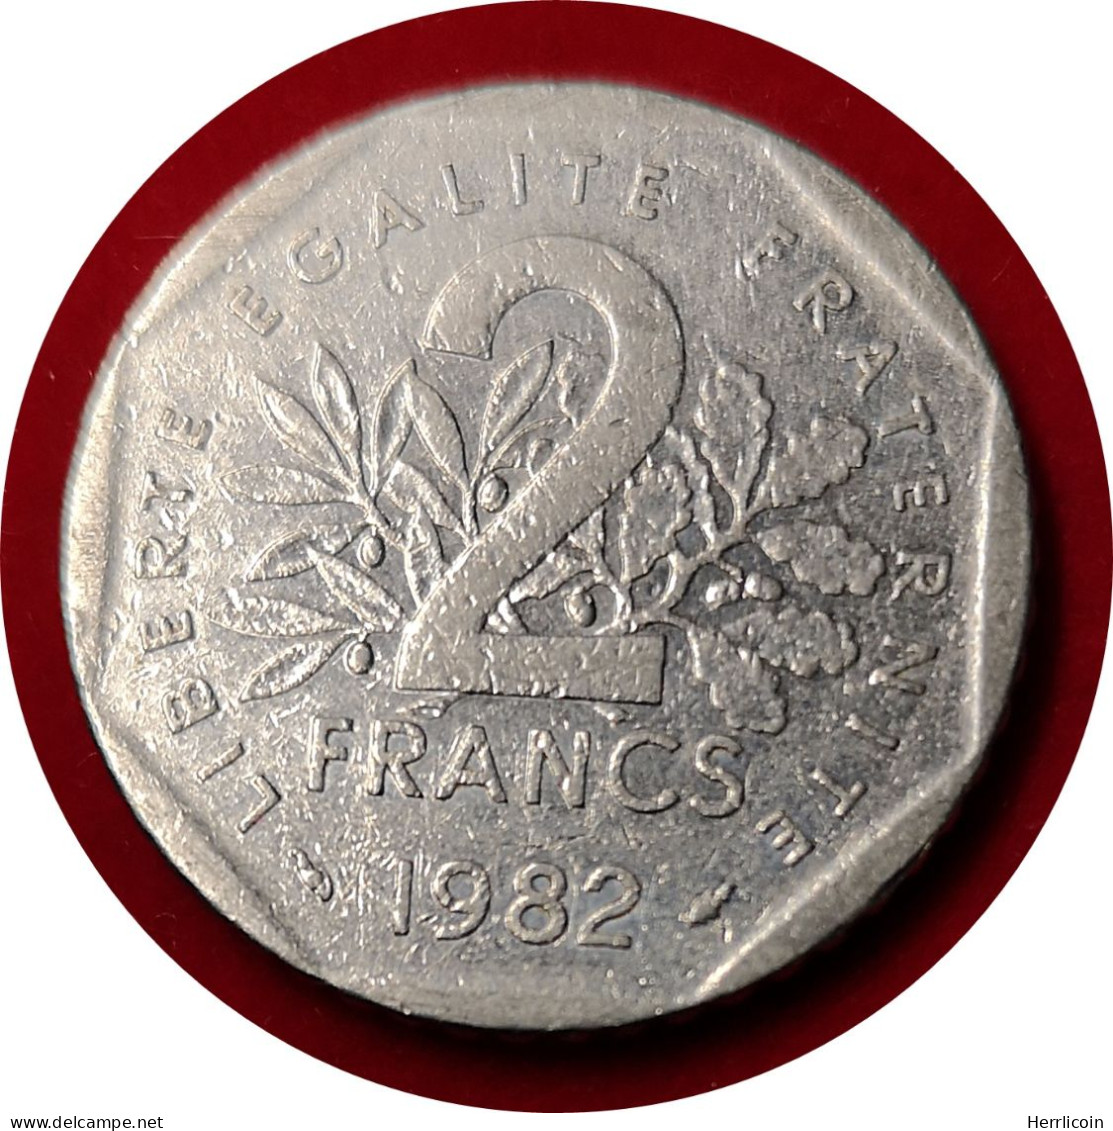 Monnaie France - 1982 - 2 Francs Semeuse - 2 Francs